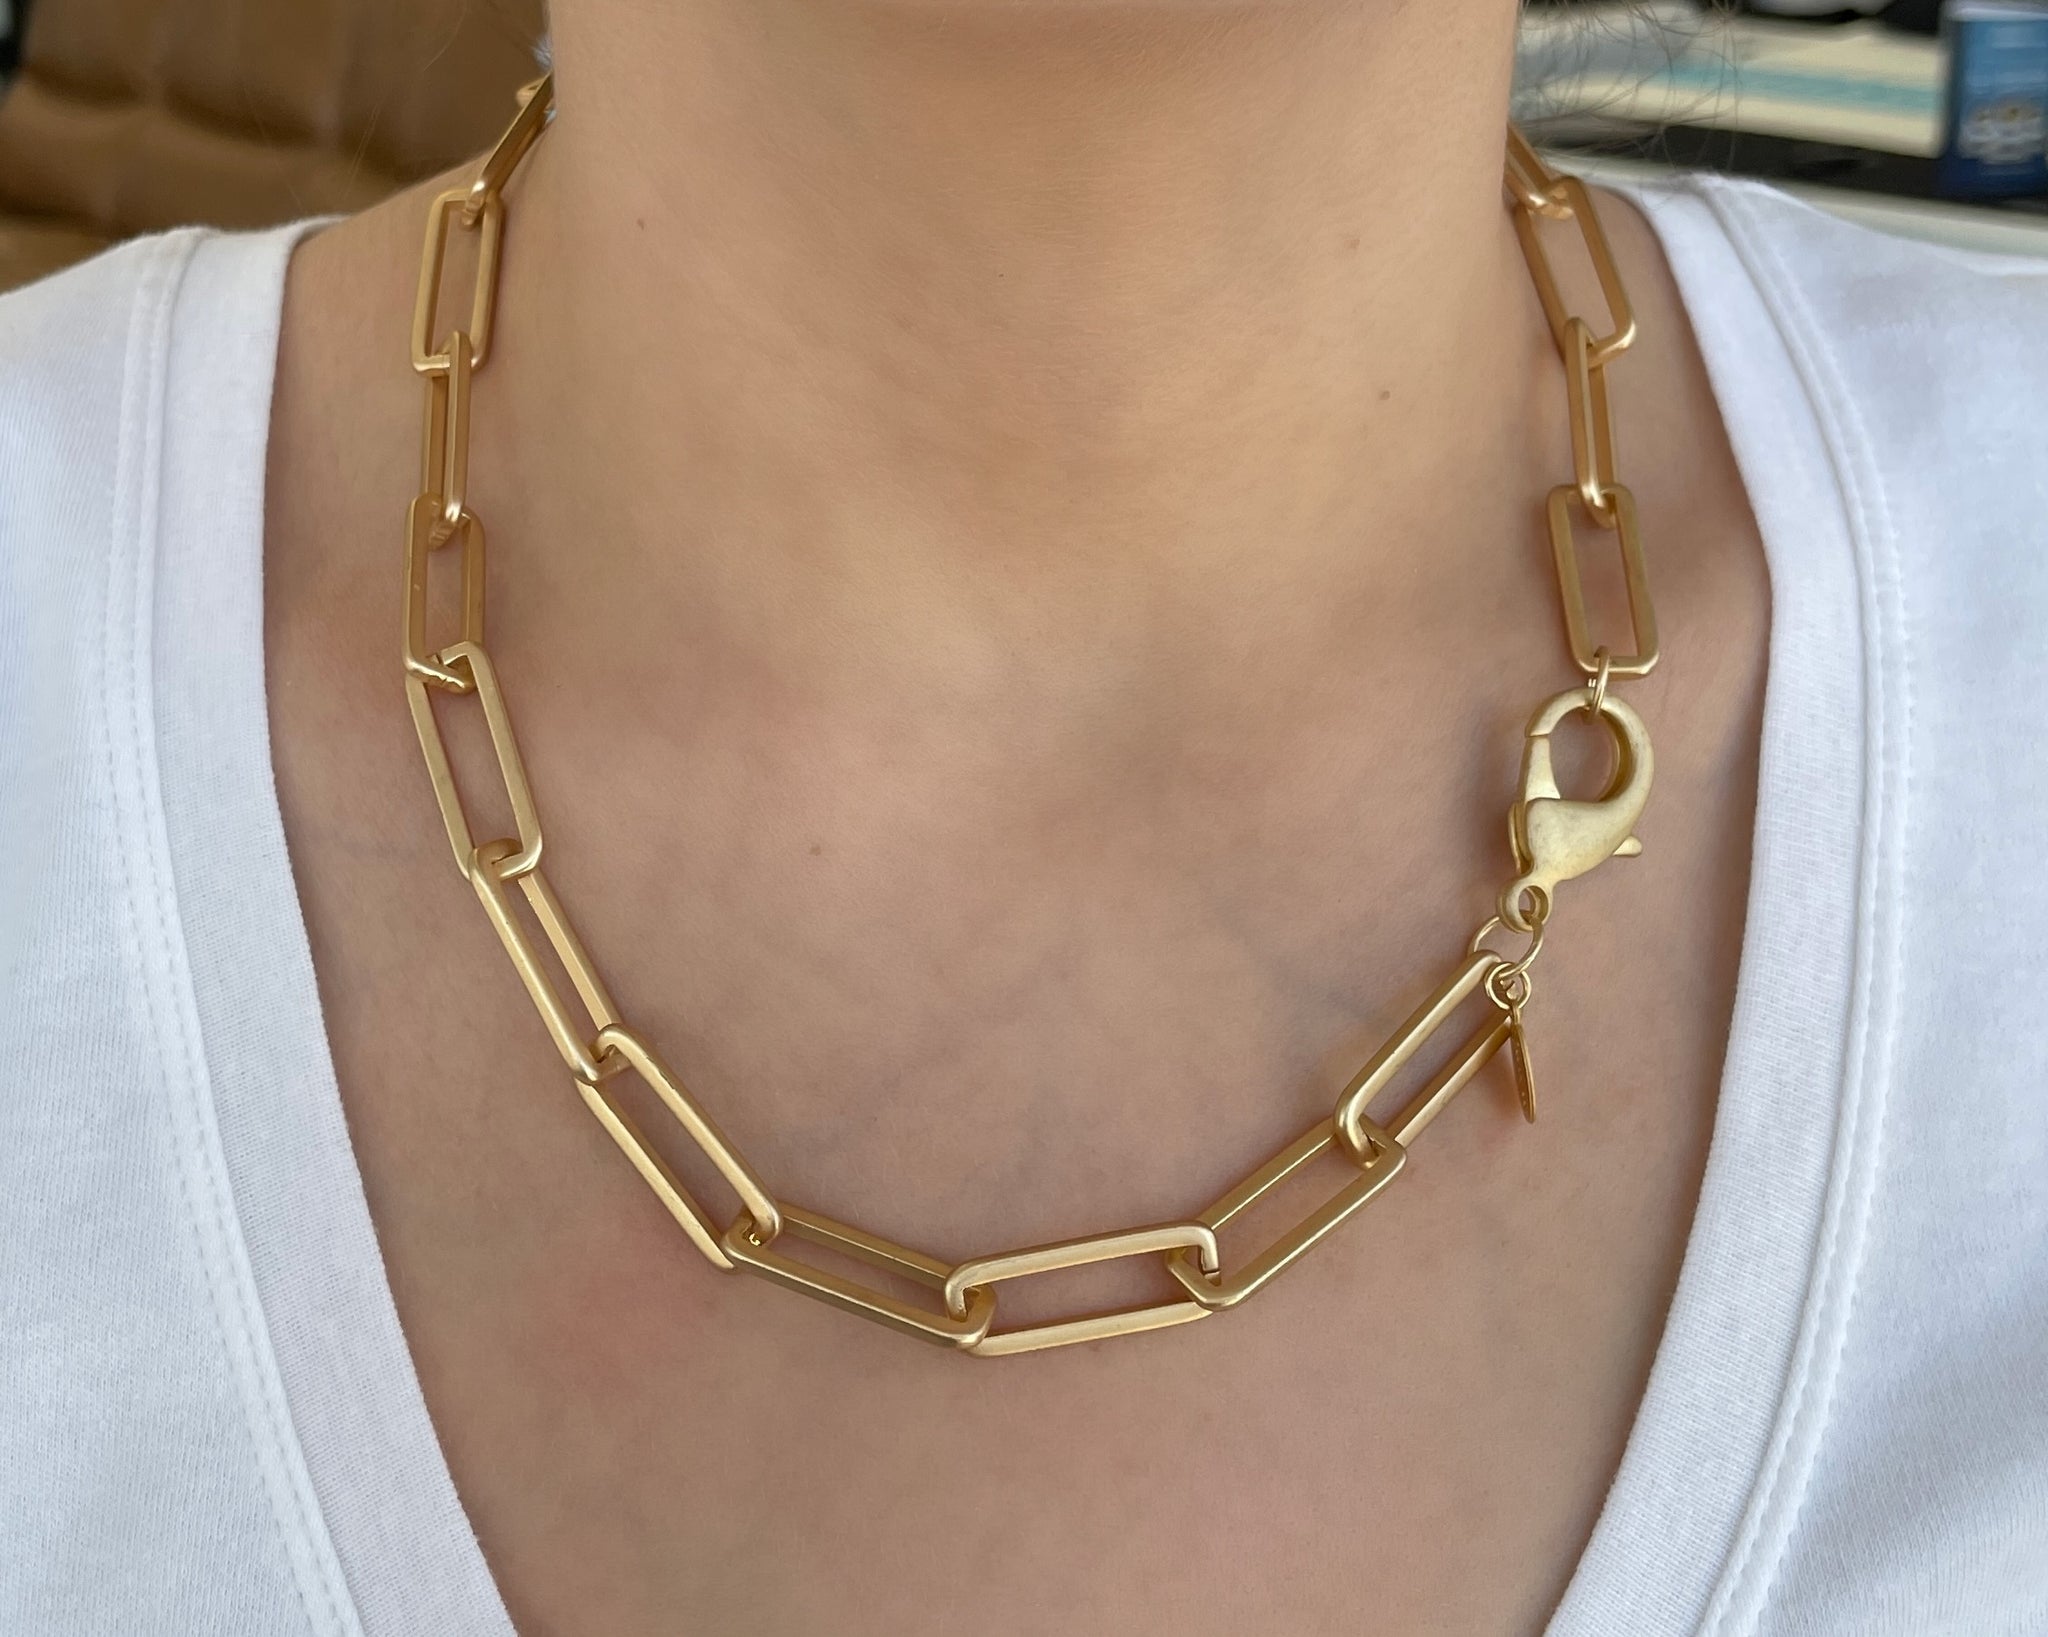 Big Gold Chains | Big gold chains, Gold chains for men, Gold chain jewelry